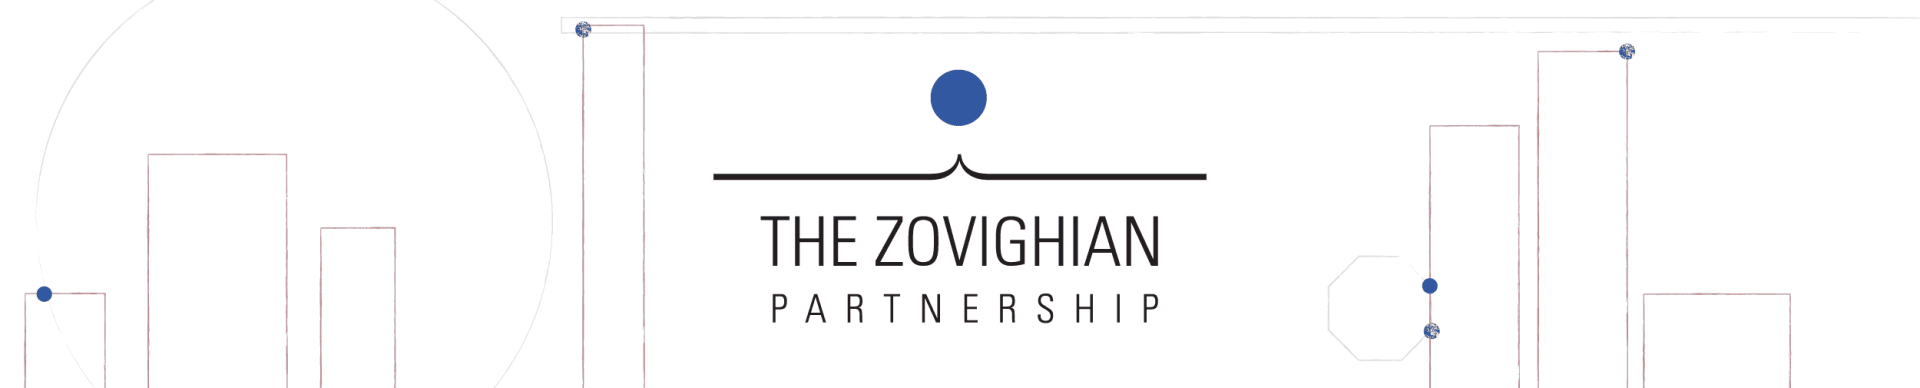 The Zovighian Partnership logo